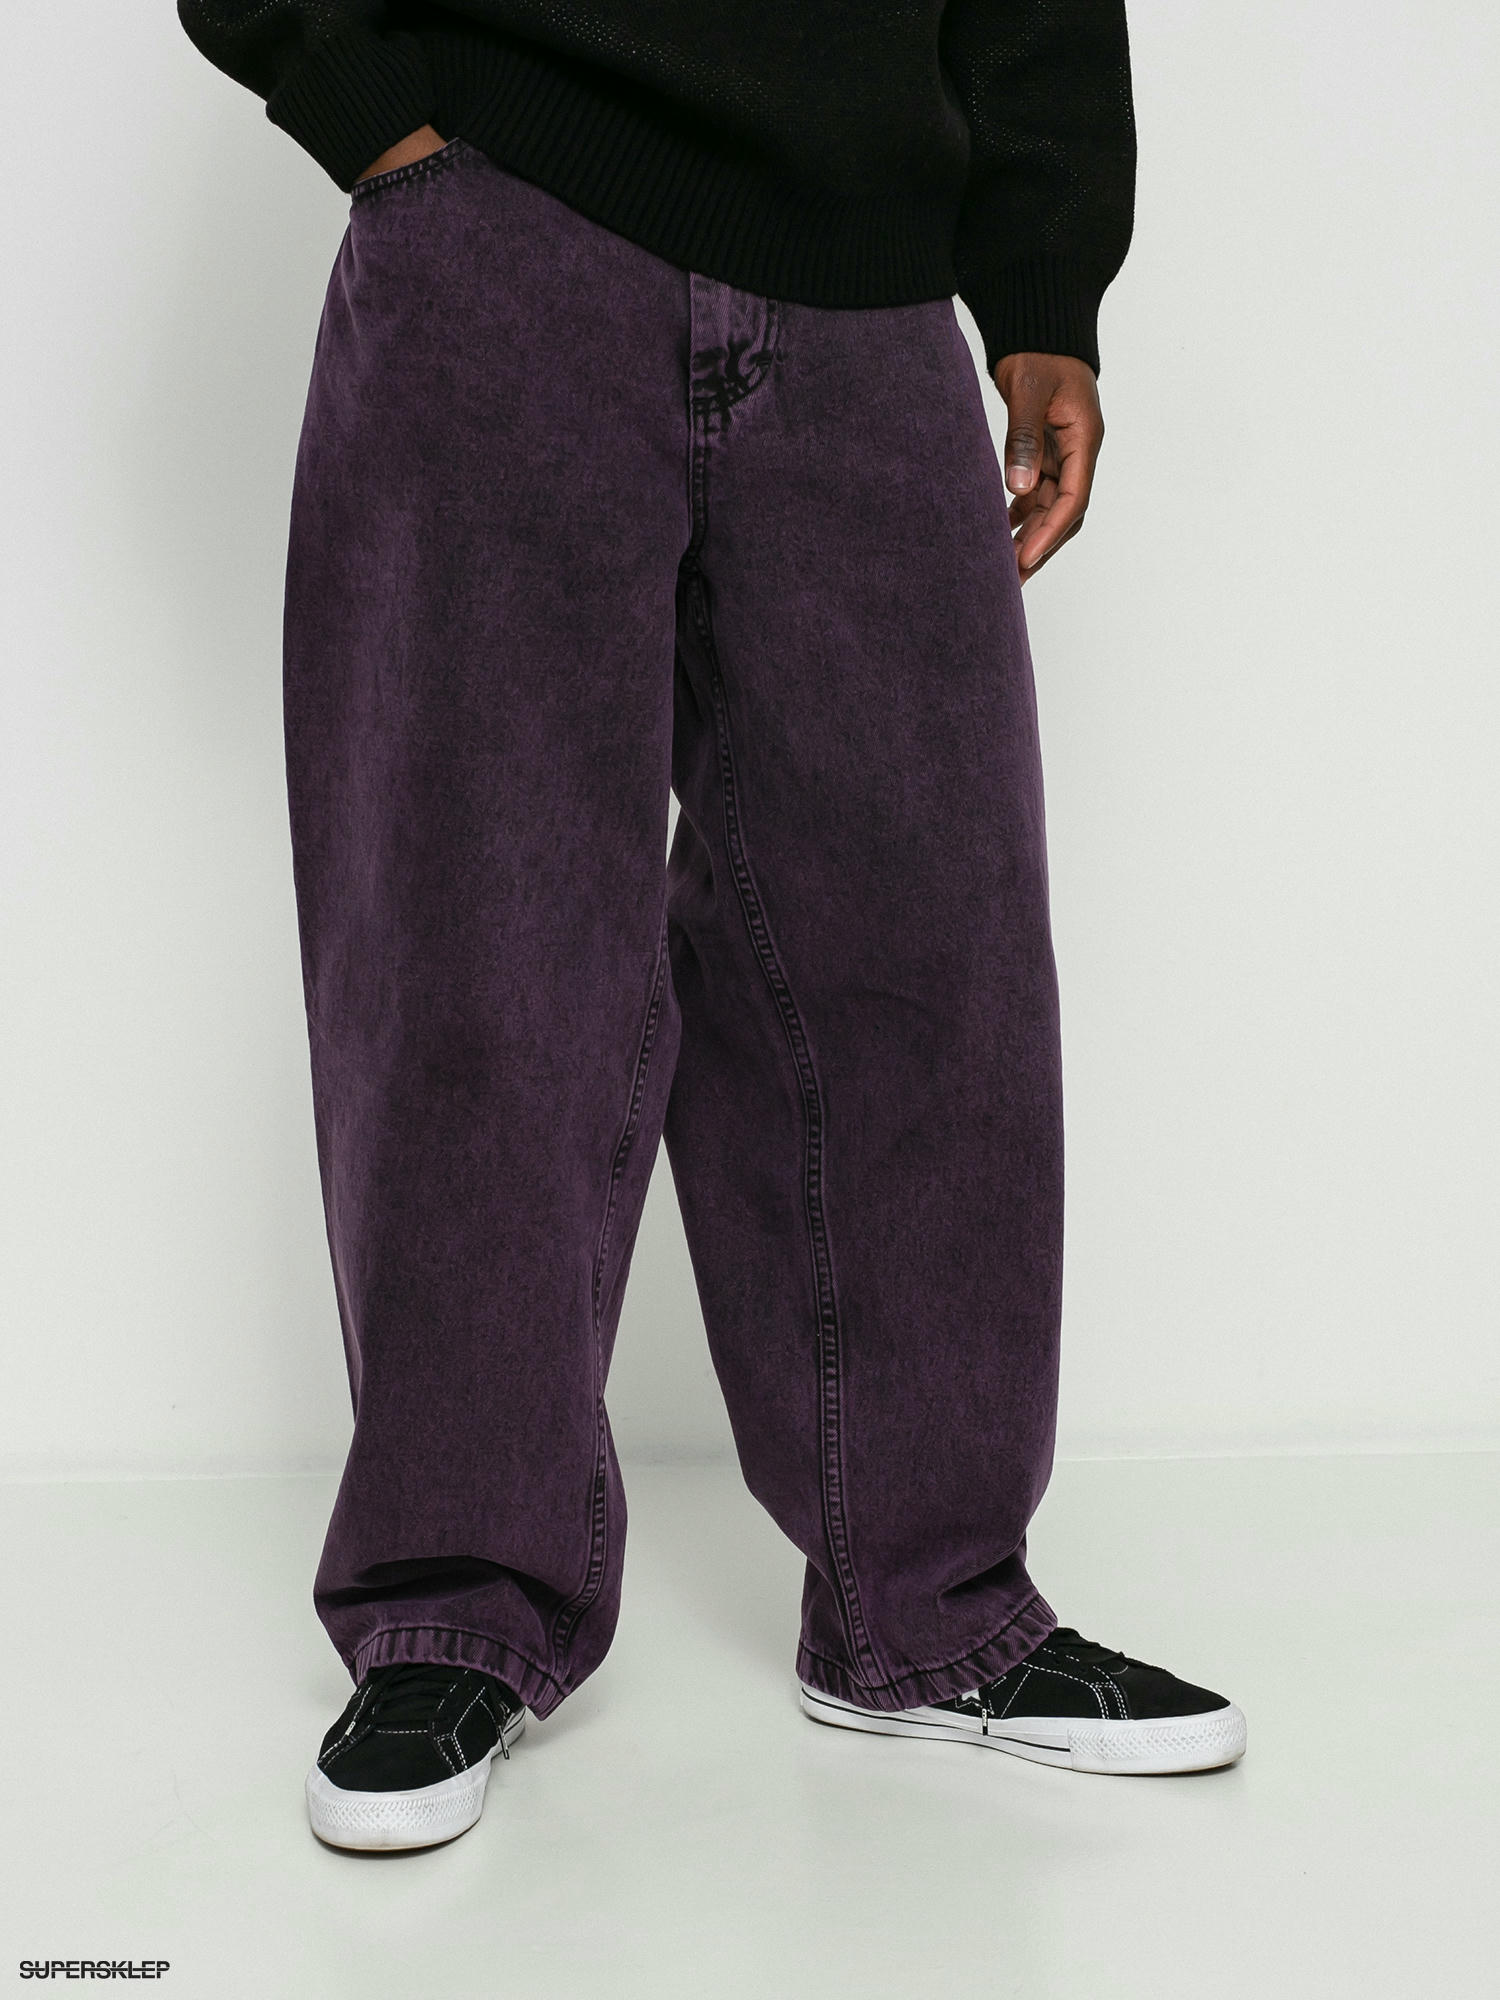 GX1000polar skate big boy jeans purple black